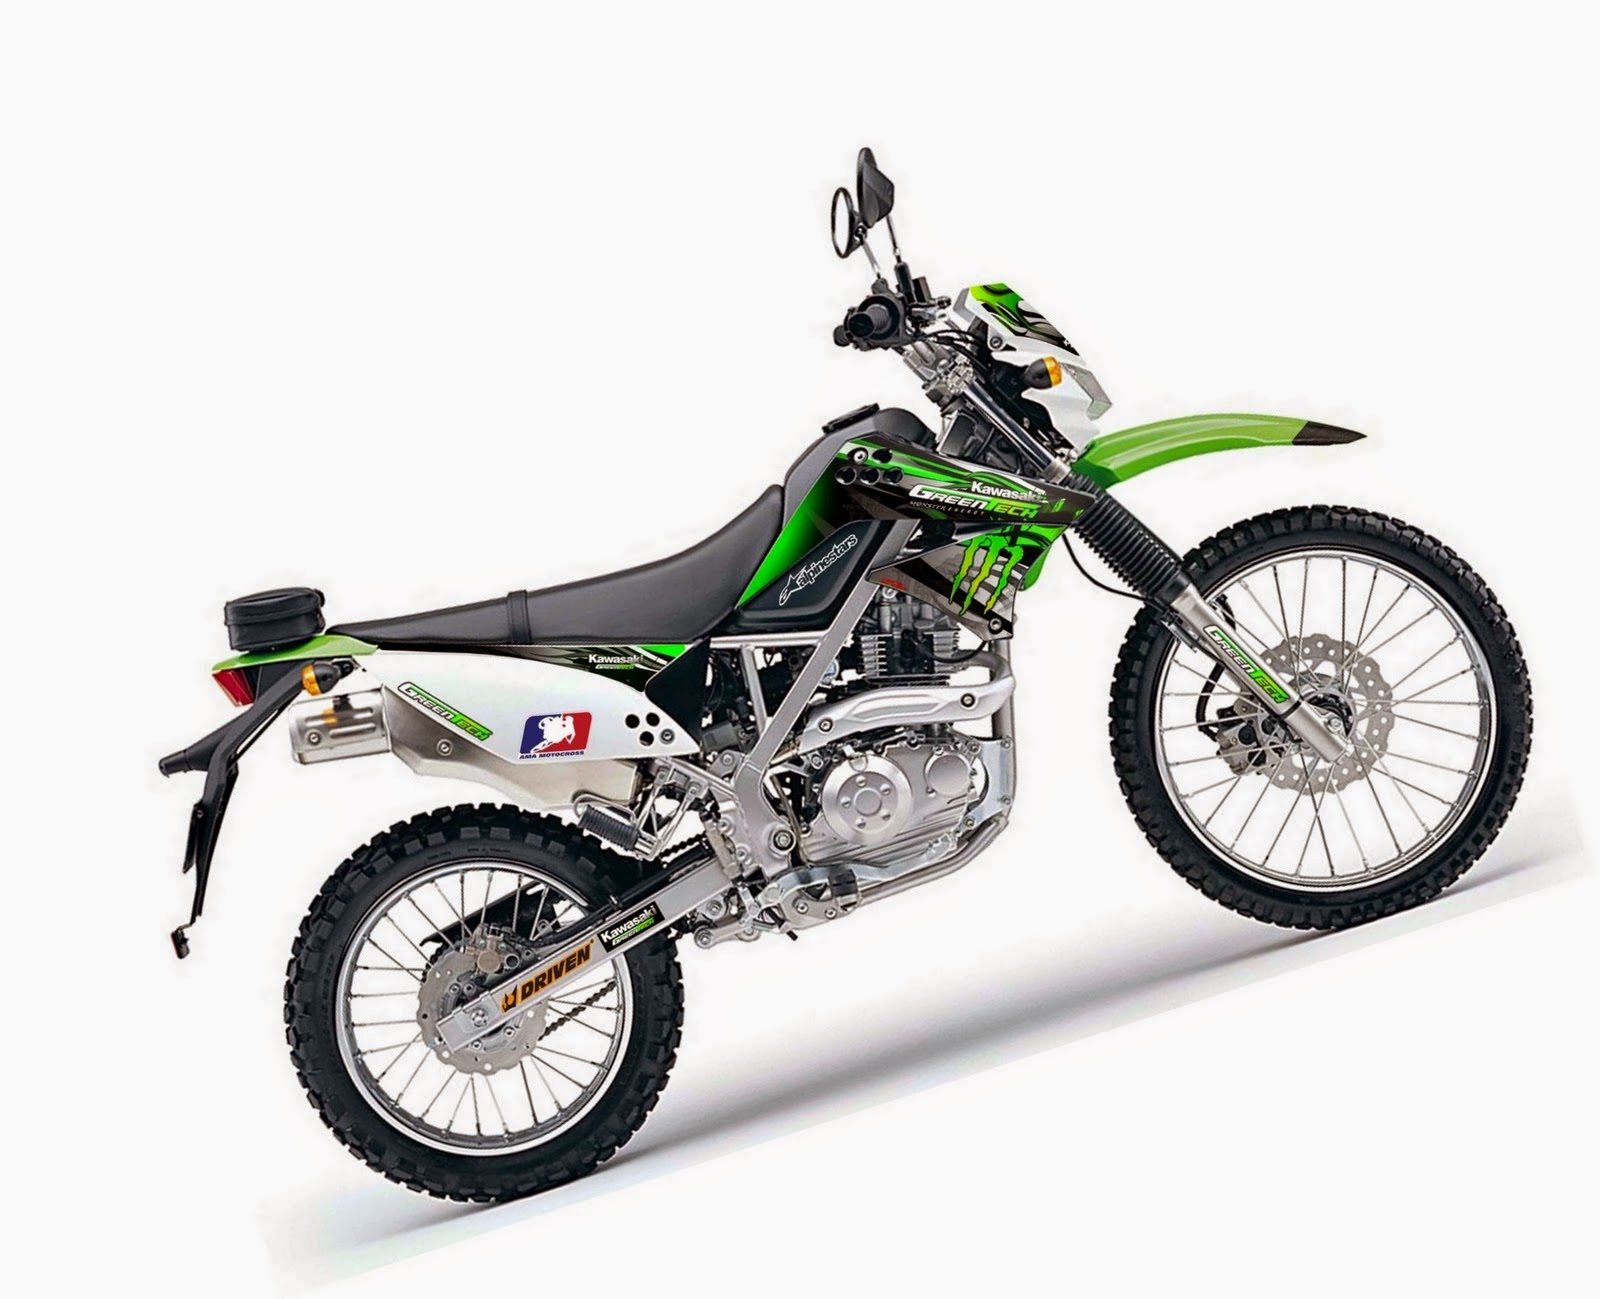 Kawasaki D-tracker 150cc Modifikasi - Thecitycyclist